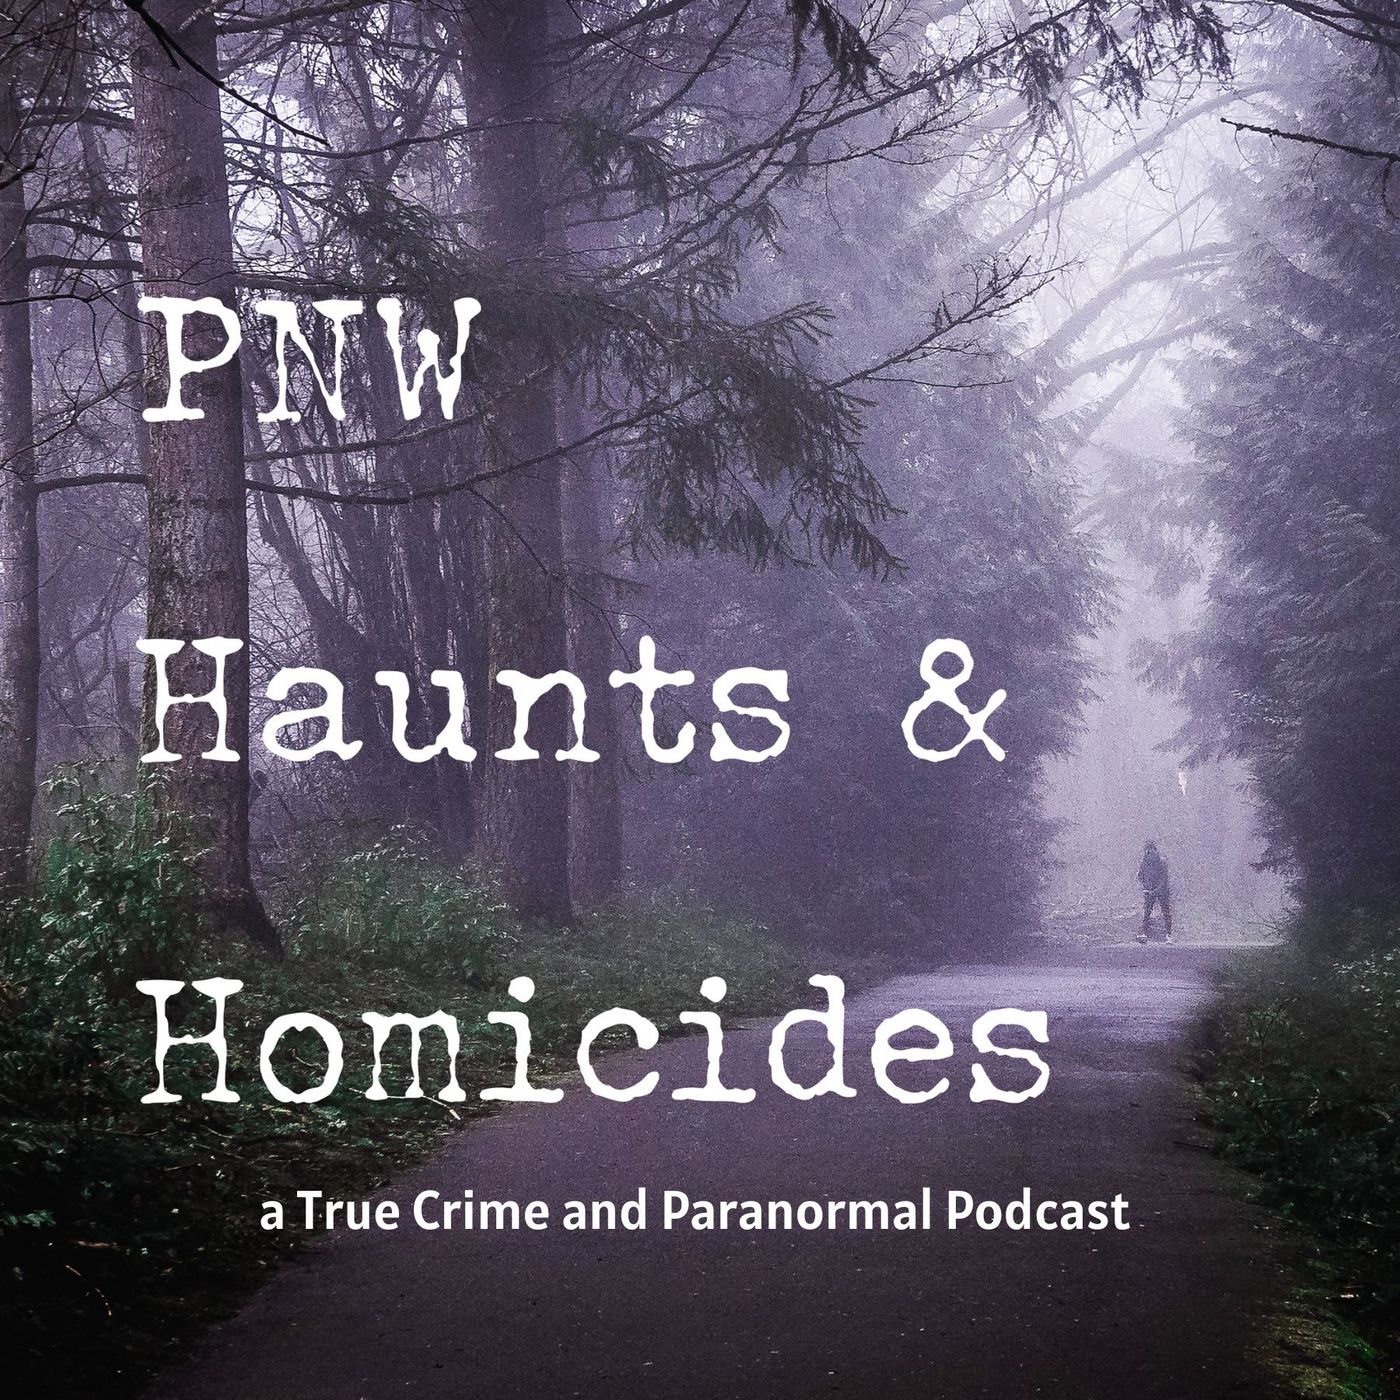 The Brophy Case by PNW Haunts & Homicides